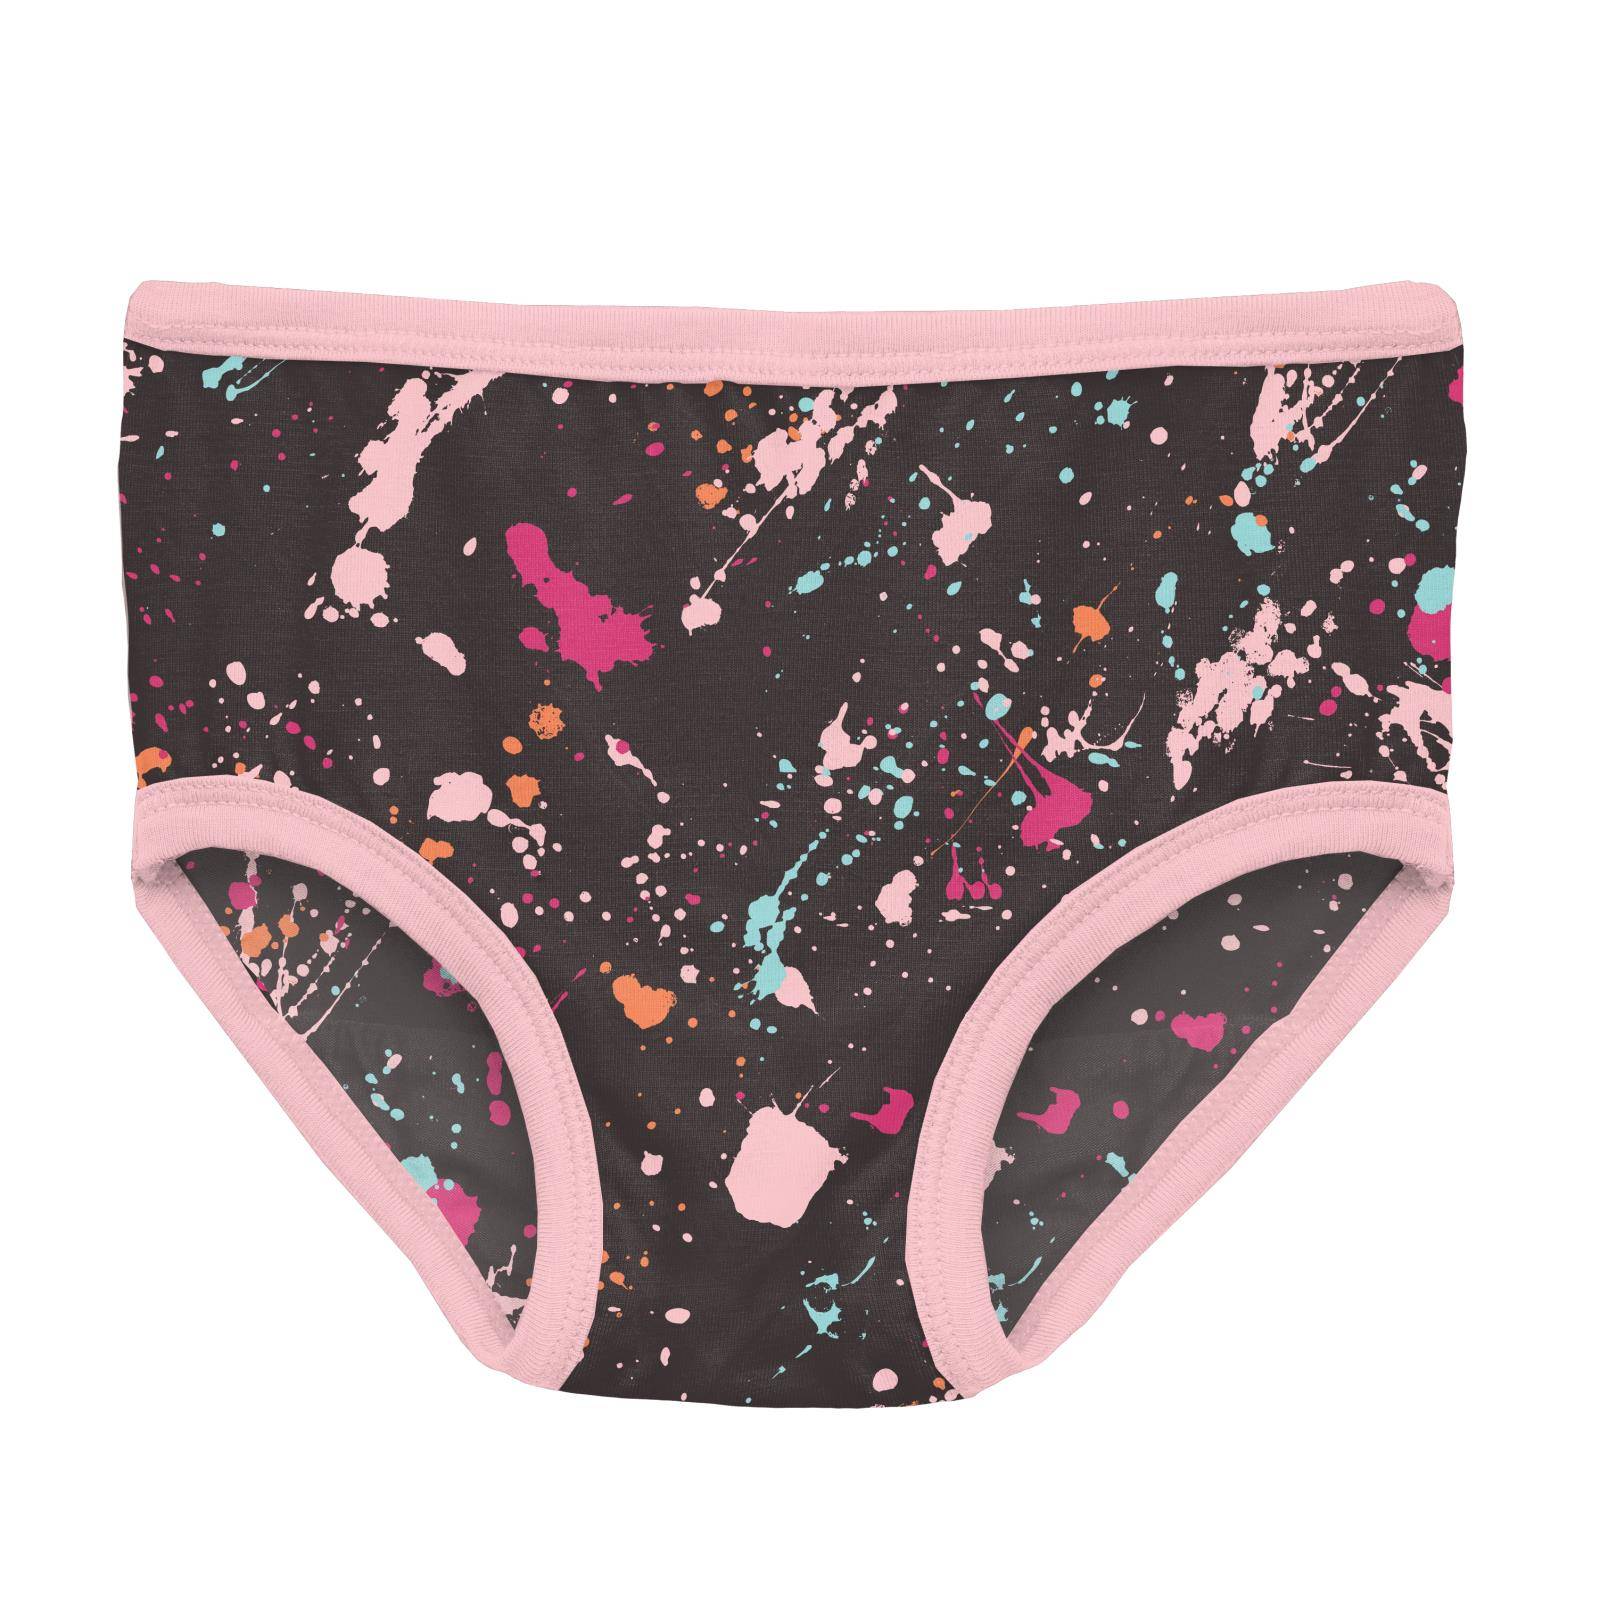 Kickee Pants Calypso Splatter Paint Print Girl's Underwear